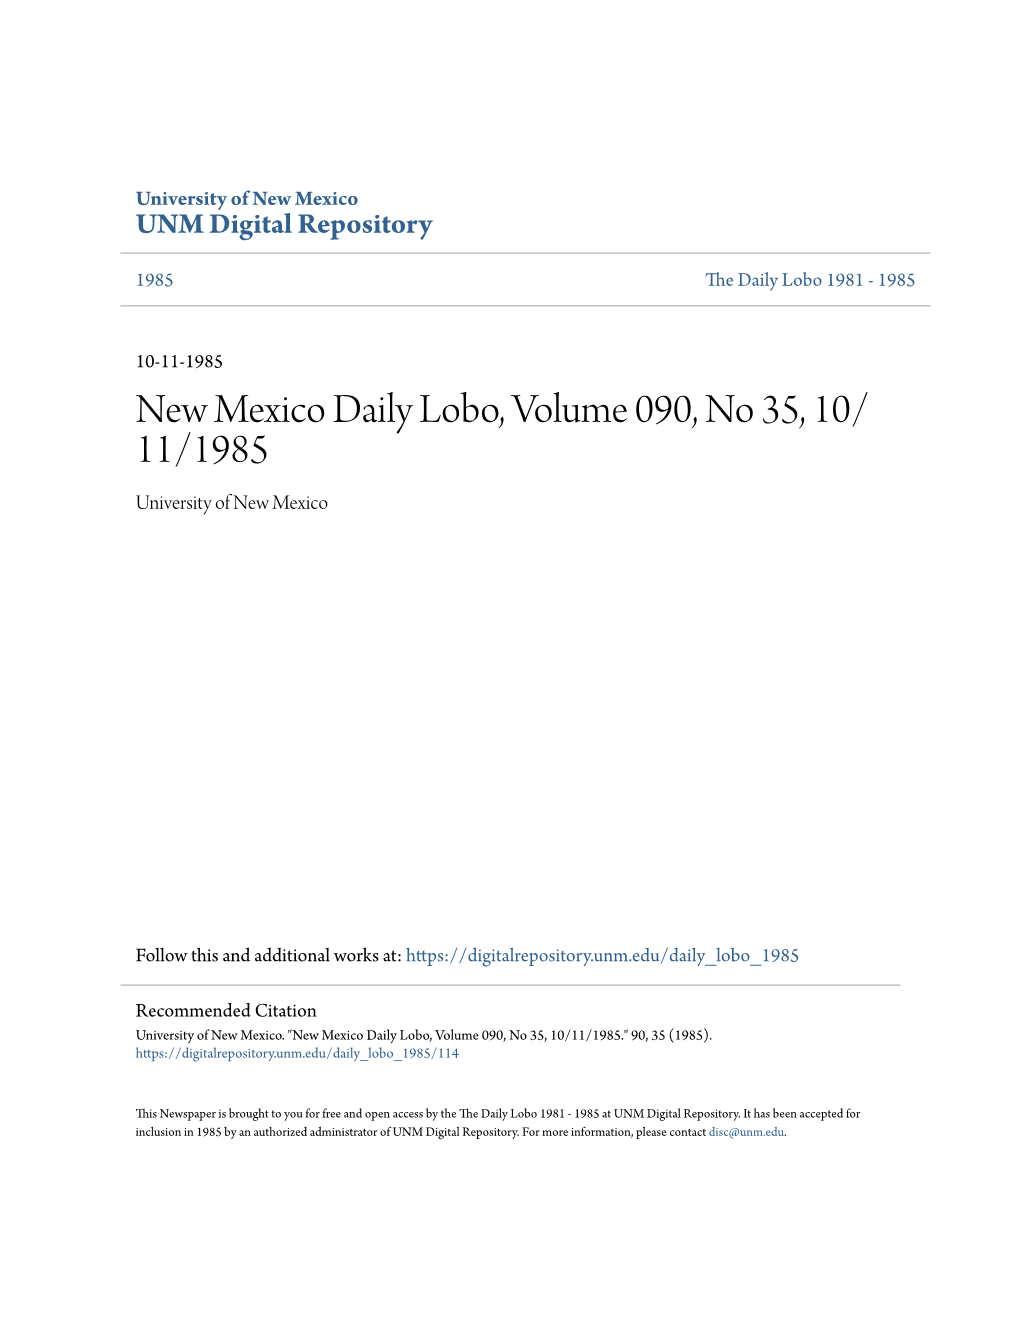 New Mexico Daily Lobo, Volume 090, No 35, 10/11/1985." 90, 35 (1985)